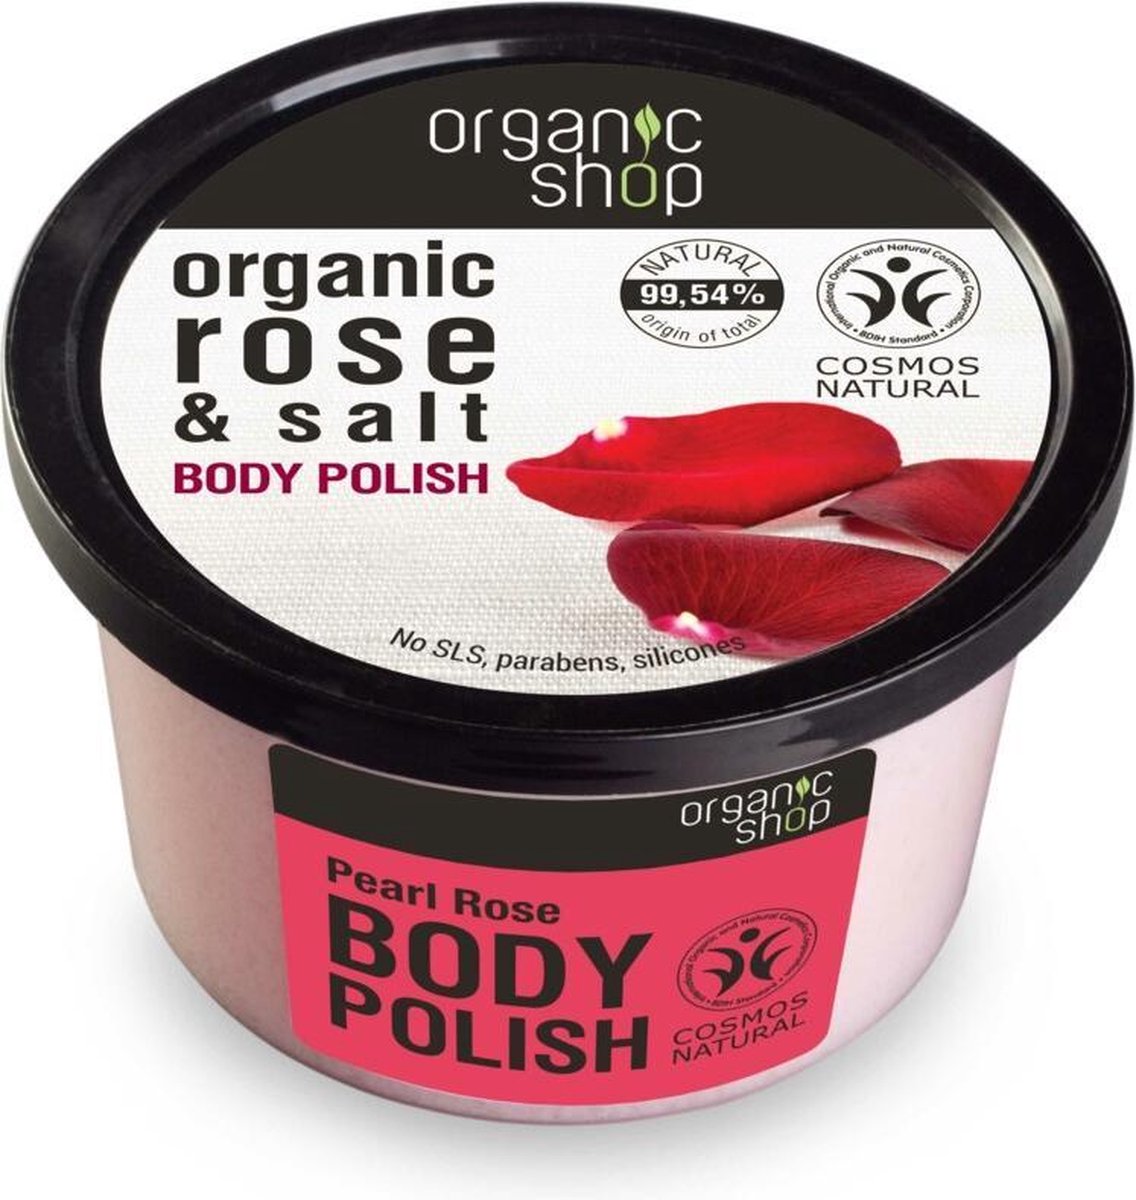 Organic Shop Foamy Body Polish Pearl Rose